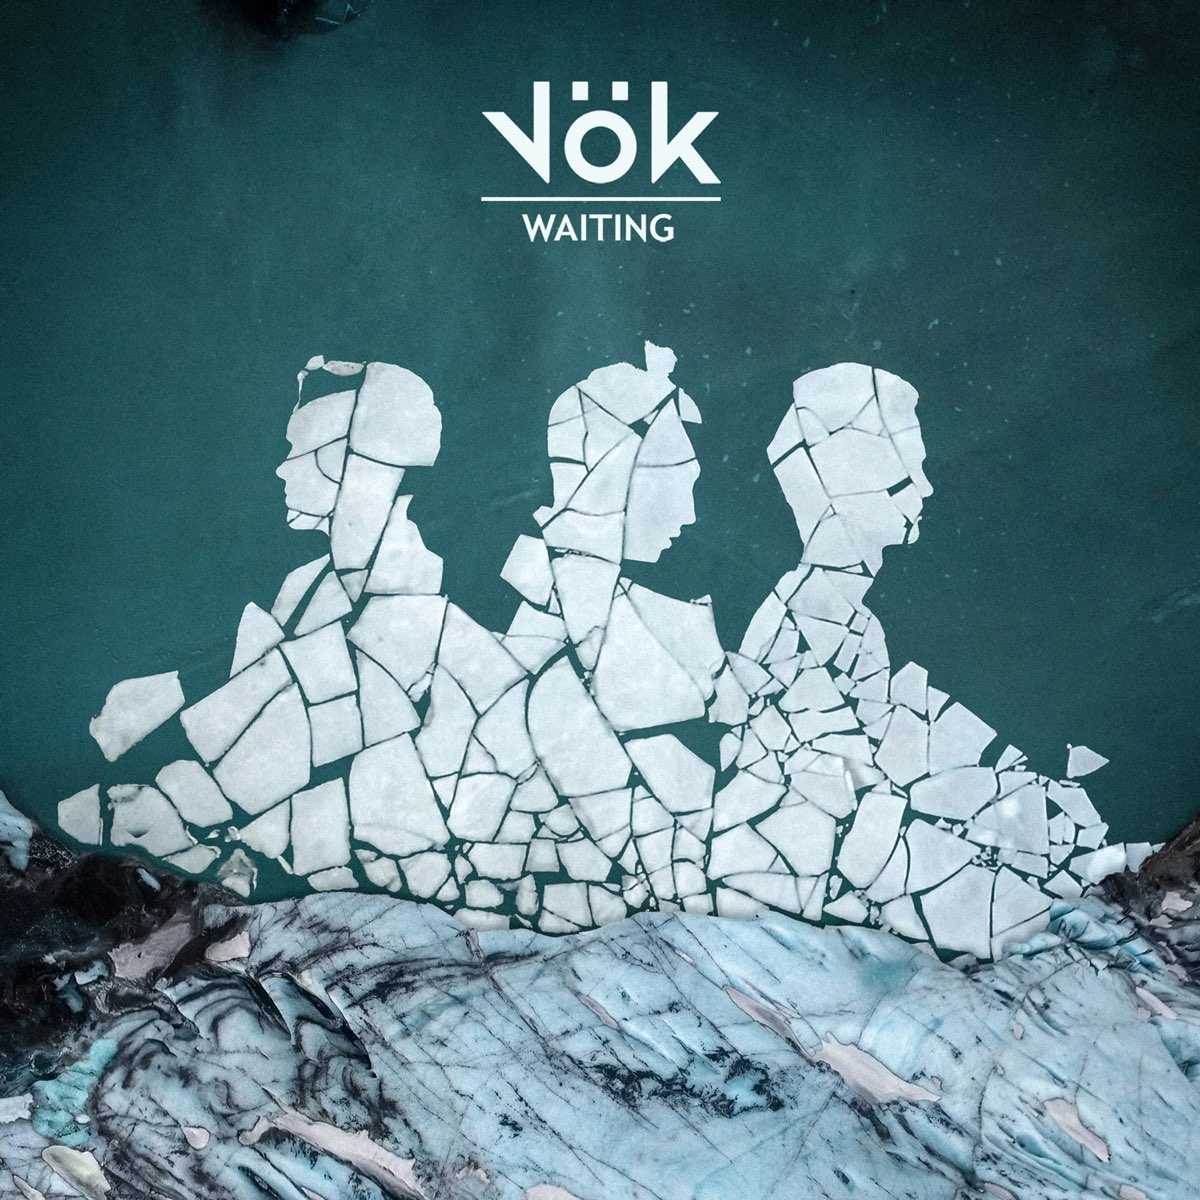 Waiting music. Группа vok Исландия. Waiting мелодия. Waiting песня. Ernst waiting for album.